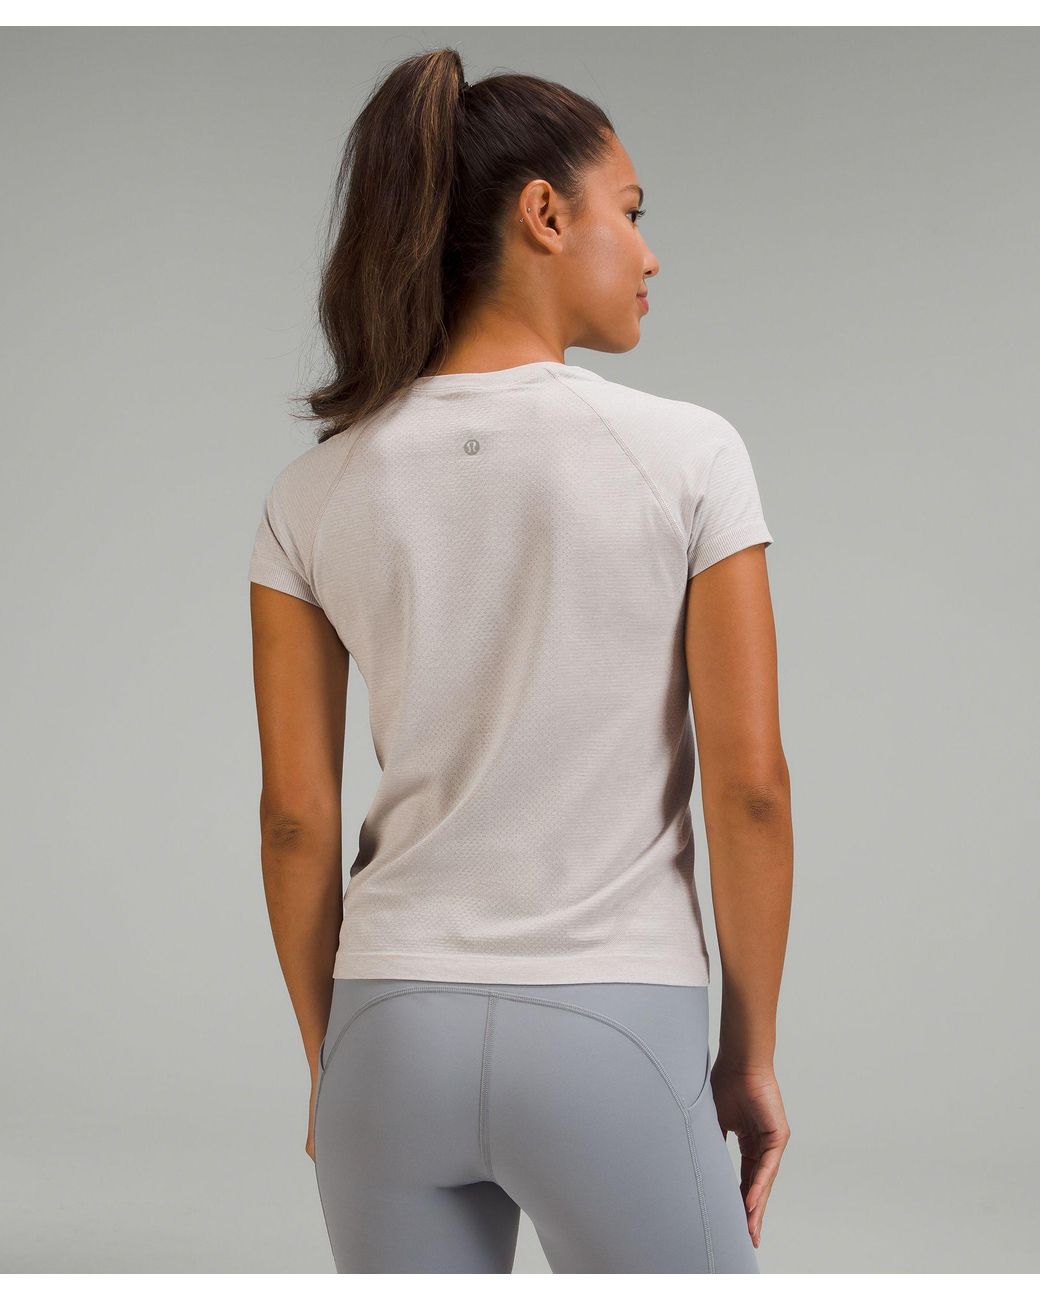 Lululemon Swiftly Tech Short Sleeve Shirt 2.0 *Race Length - Chrome / White  - lulu fanatics